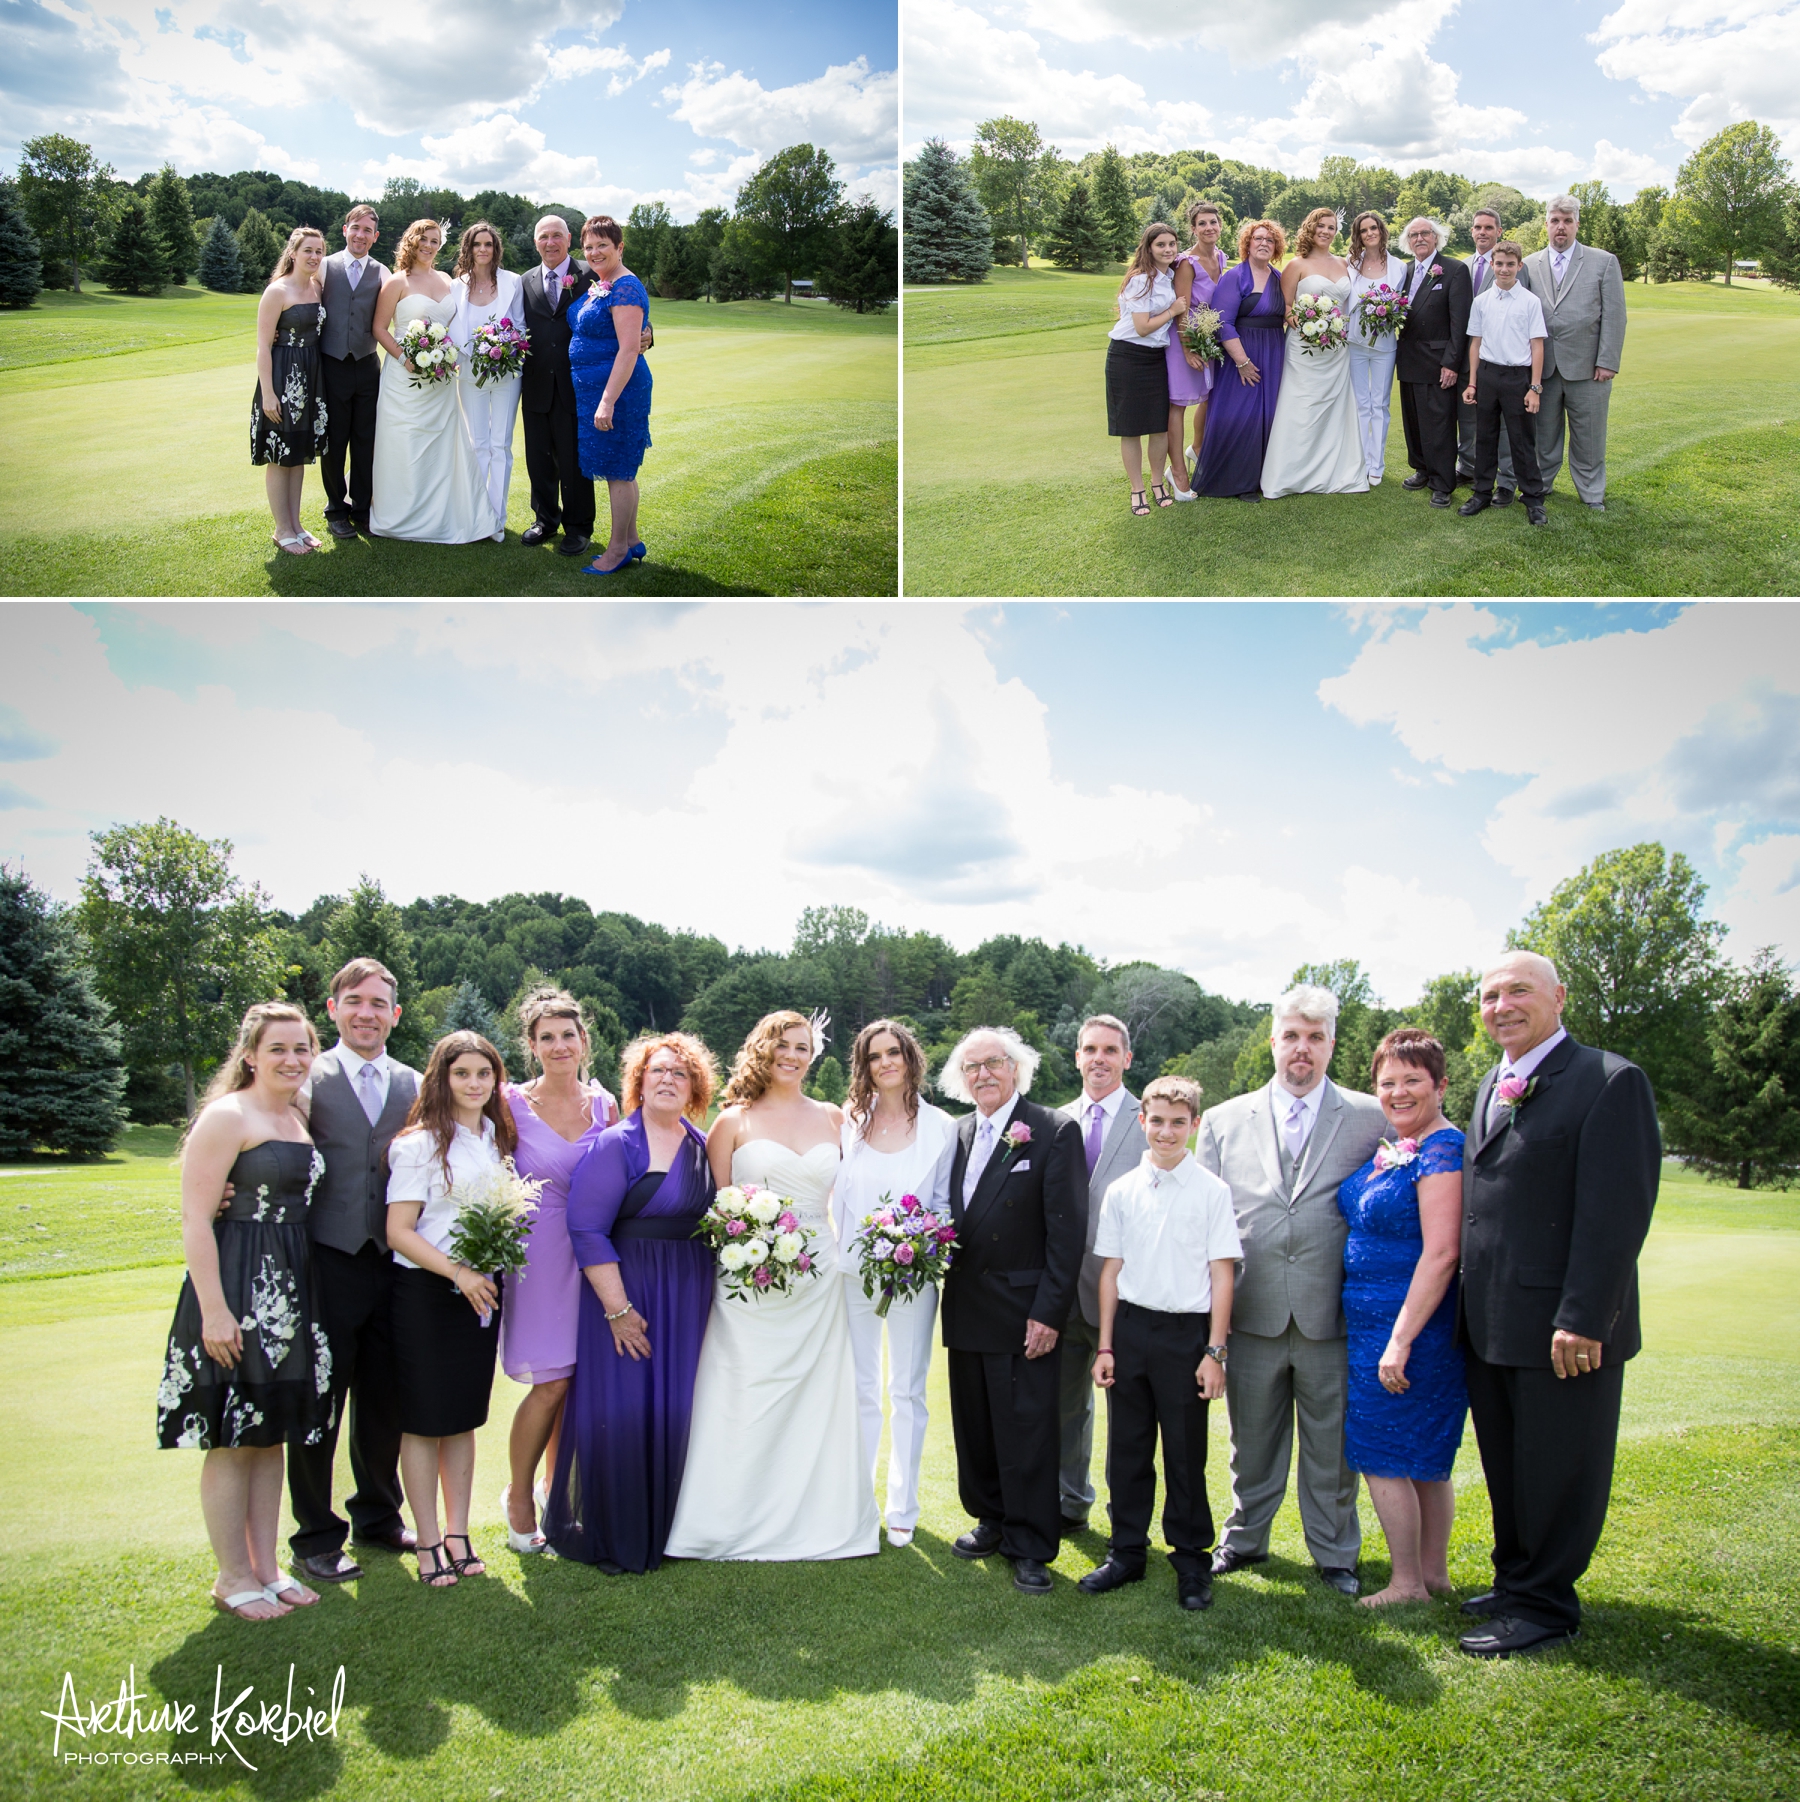 Same-Sex Wedding - Kettle Creek Golf Club - Port Stanley Beach - Arthur Korbiel Photography - London Wedding Photographer_009.jpg